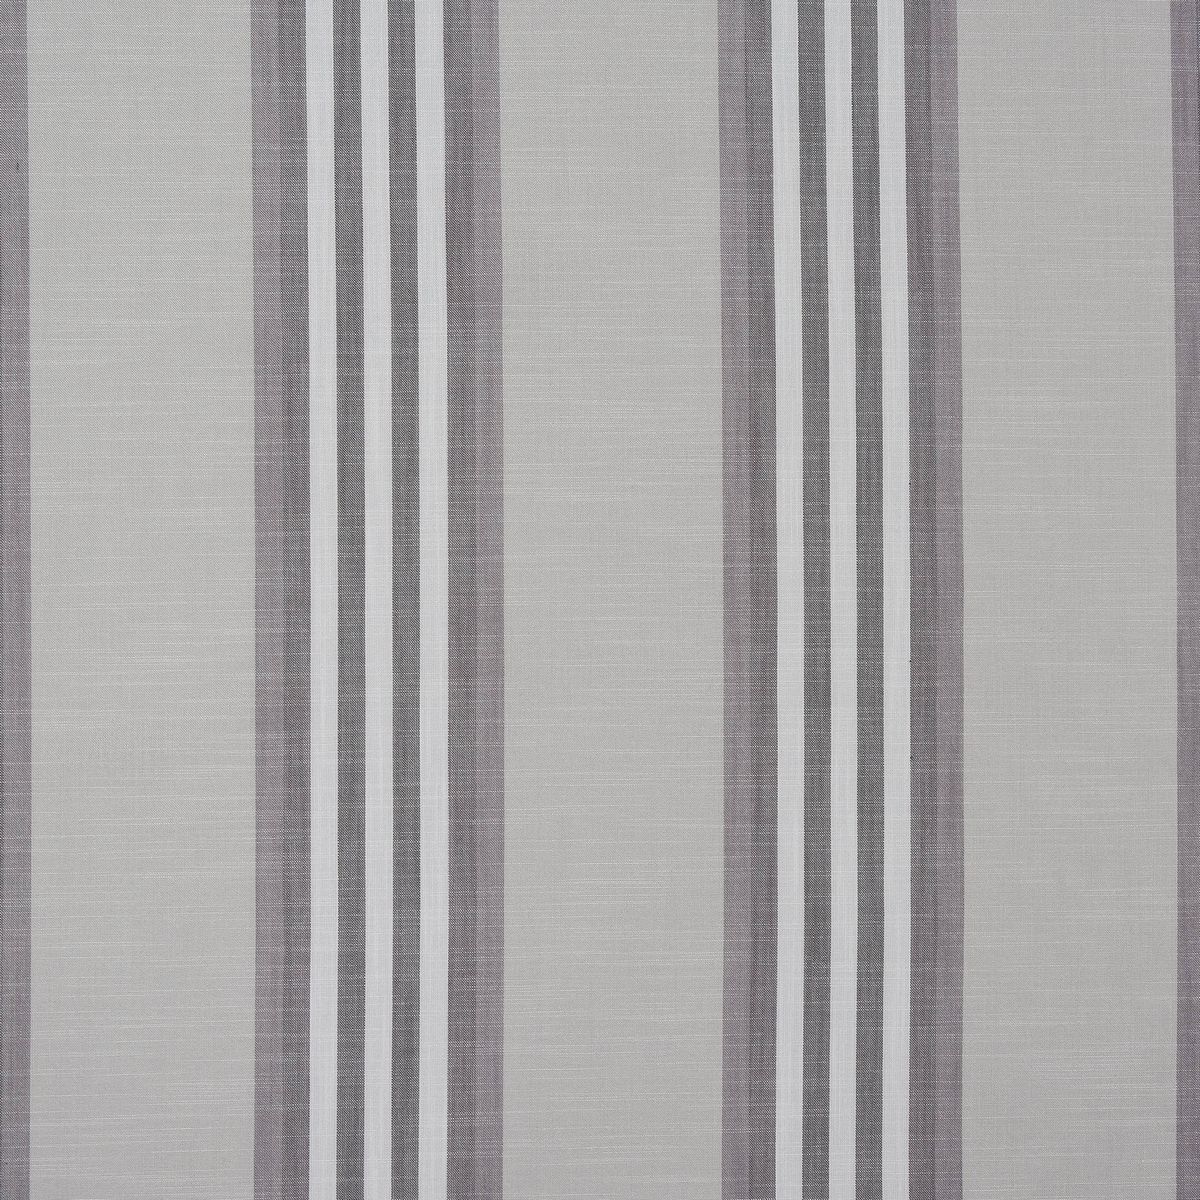 Manali Stripe Charcoal Fabric by Porter & Stone